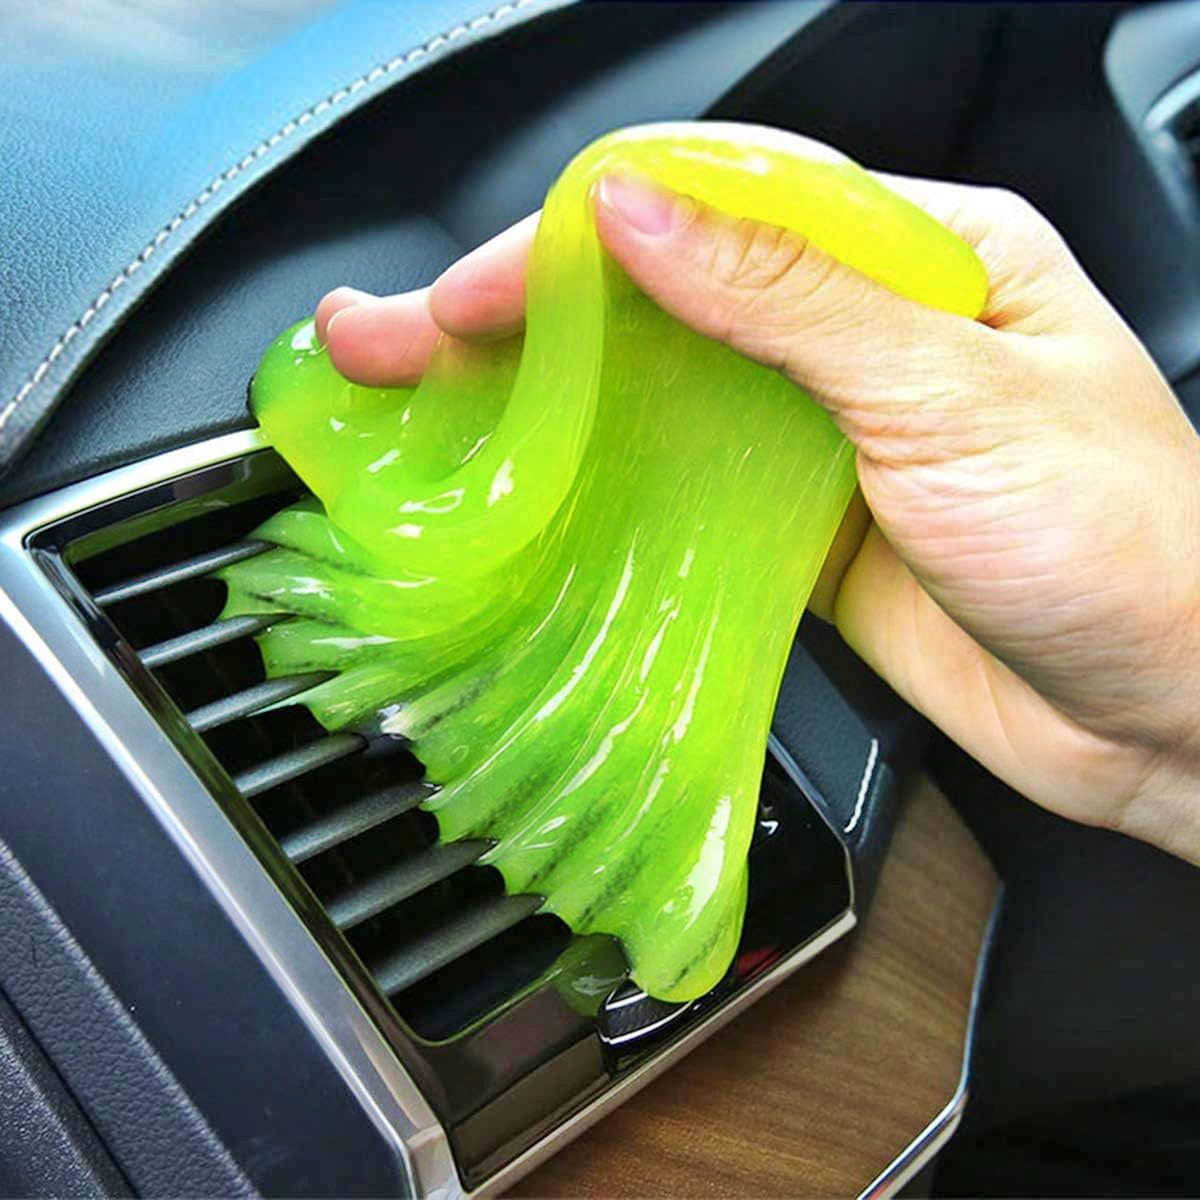  TICARVE Car Cleaning Gel Detailing Putty Car Putty Auto  Detailing Tools Car Interior Cleaner Cleaning Slime Car Accessories  Keyboard Cleaner Rose/NT WT: 5.6 oz (160 gr) : Automotive